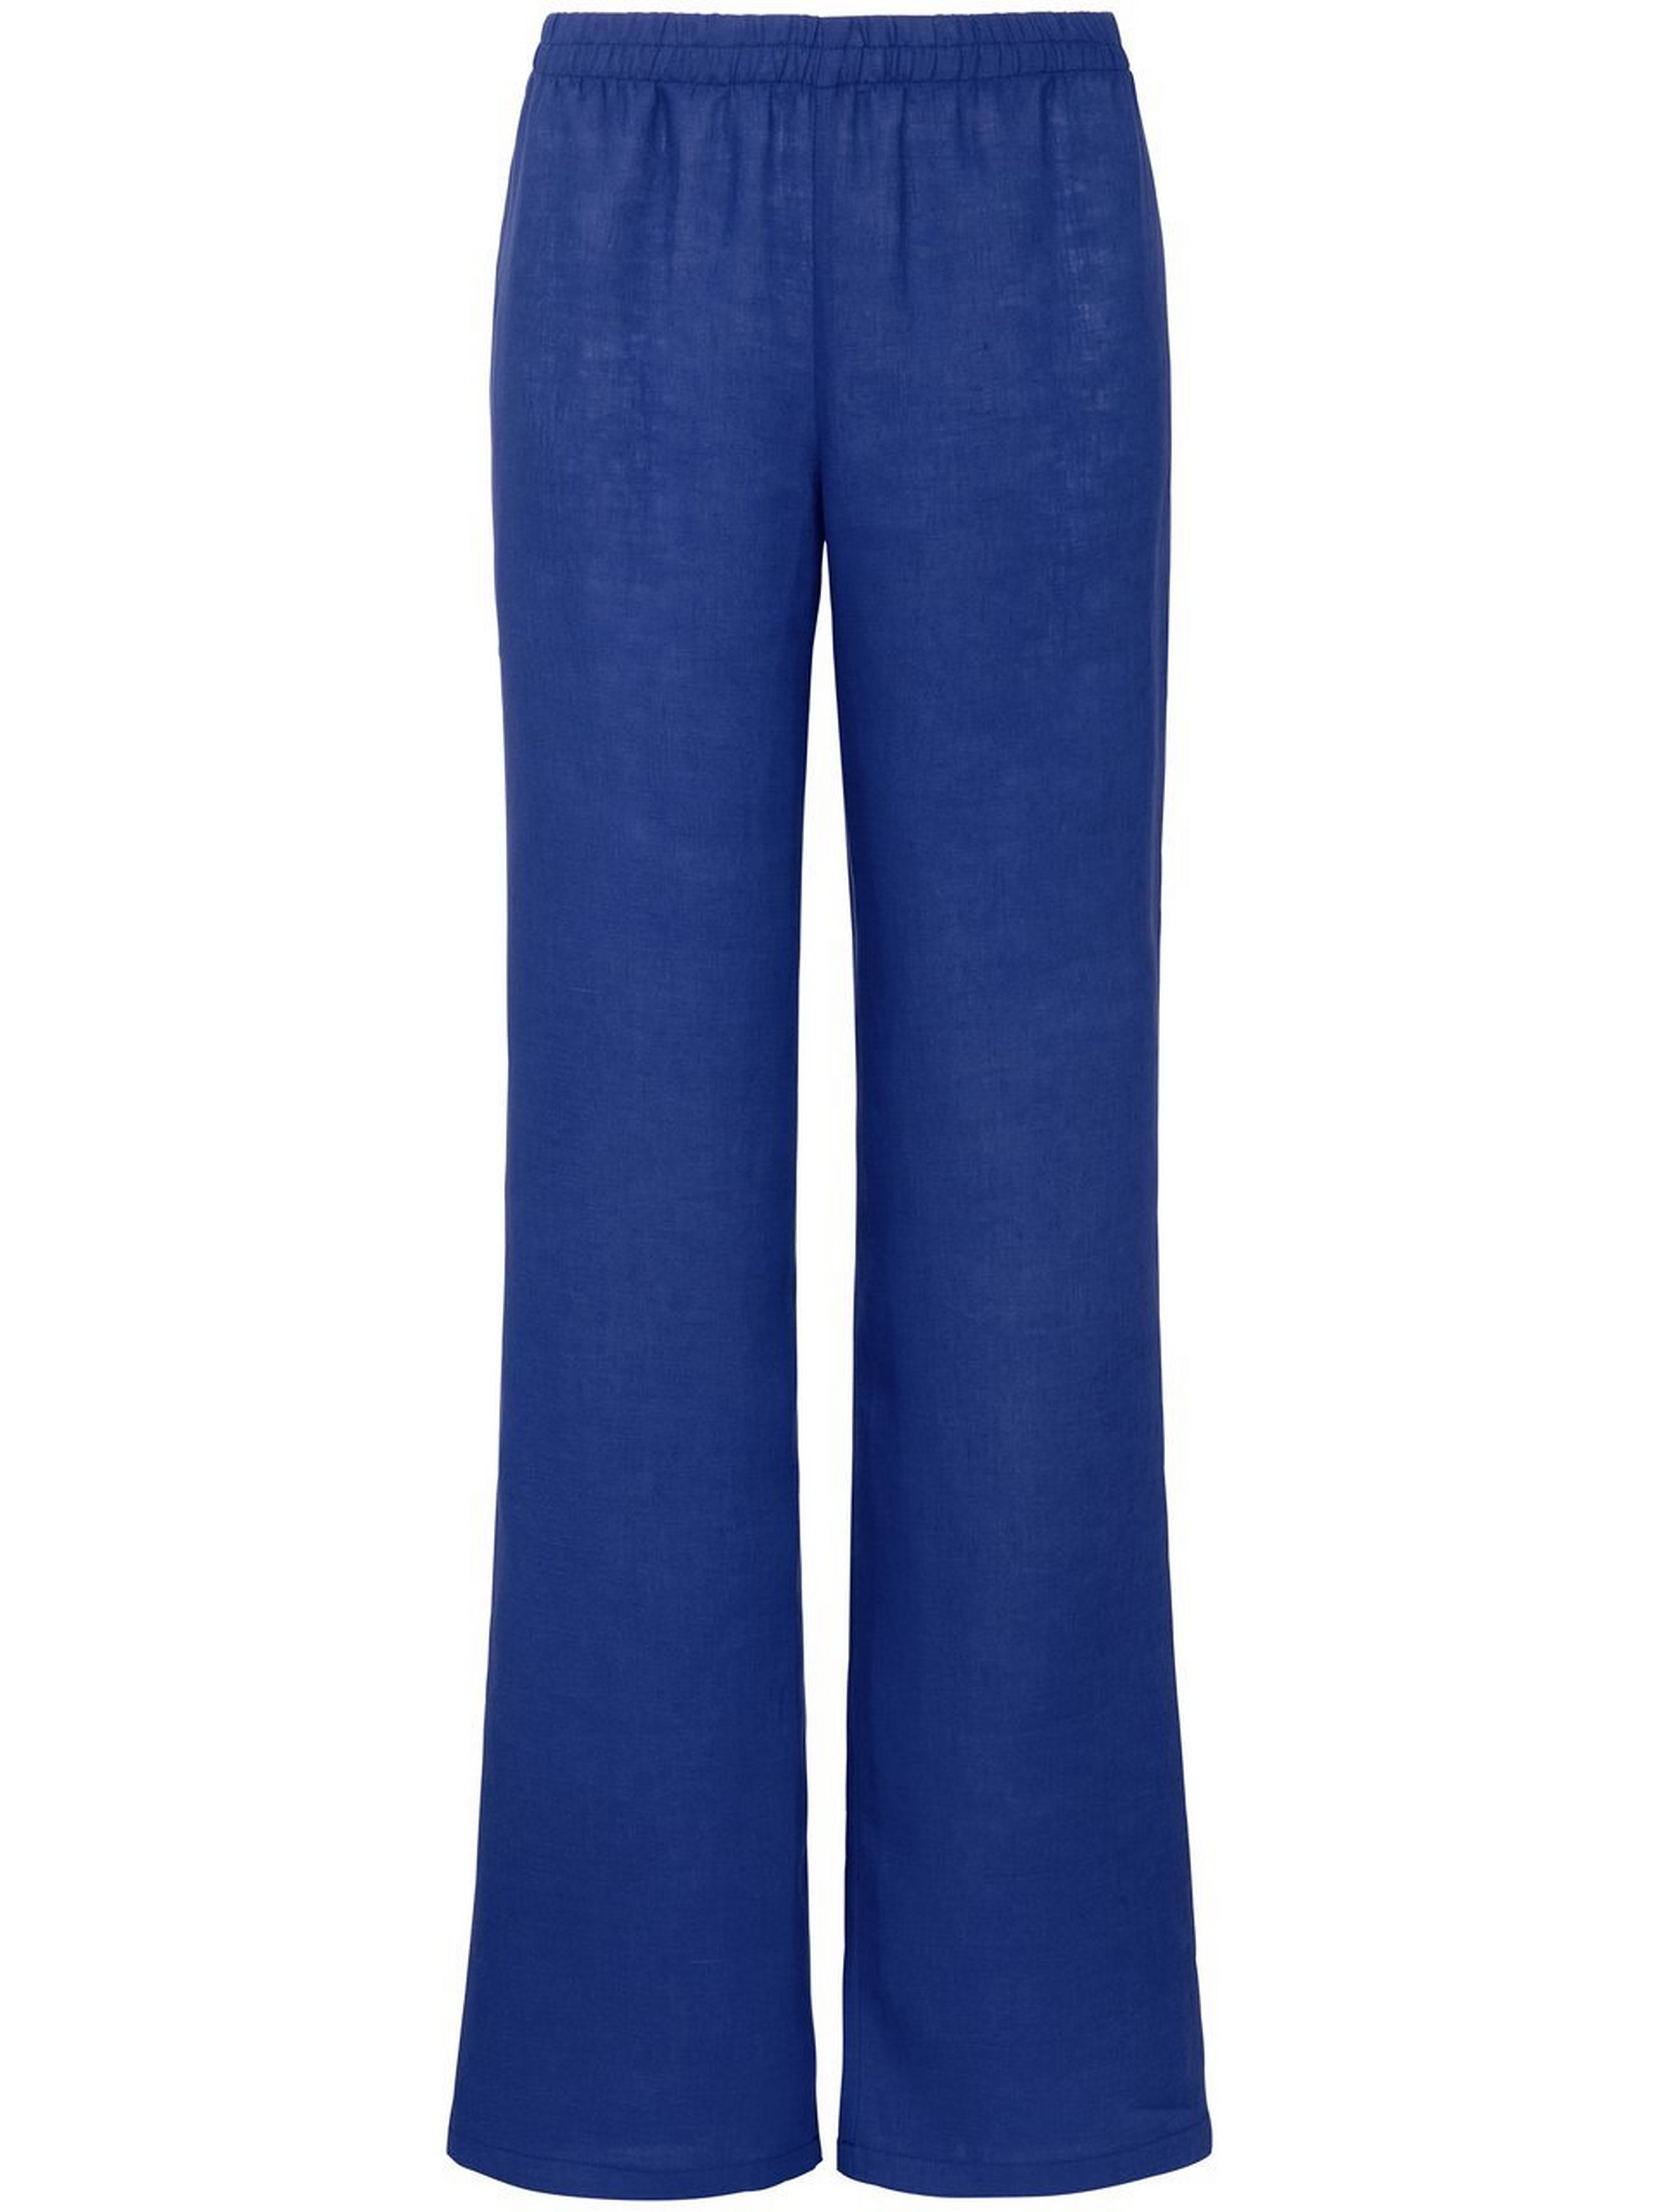 Le pantalon 100% lin  Peter Hahn bleu